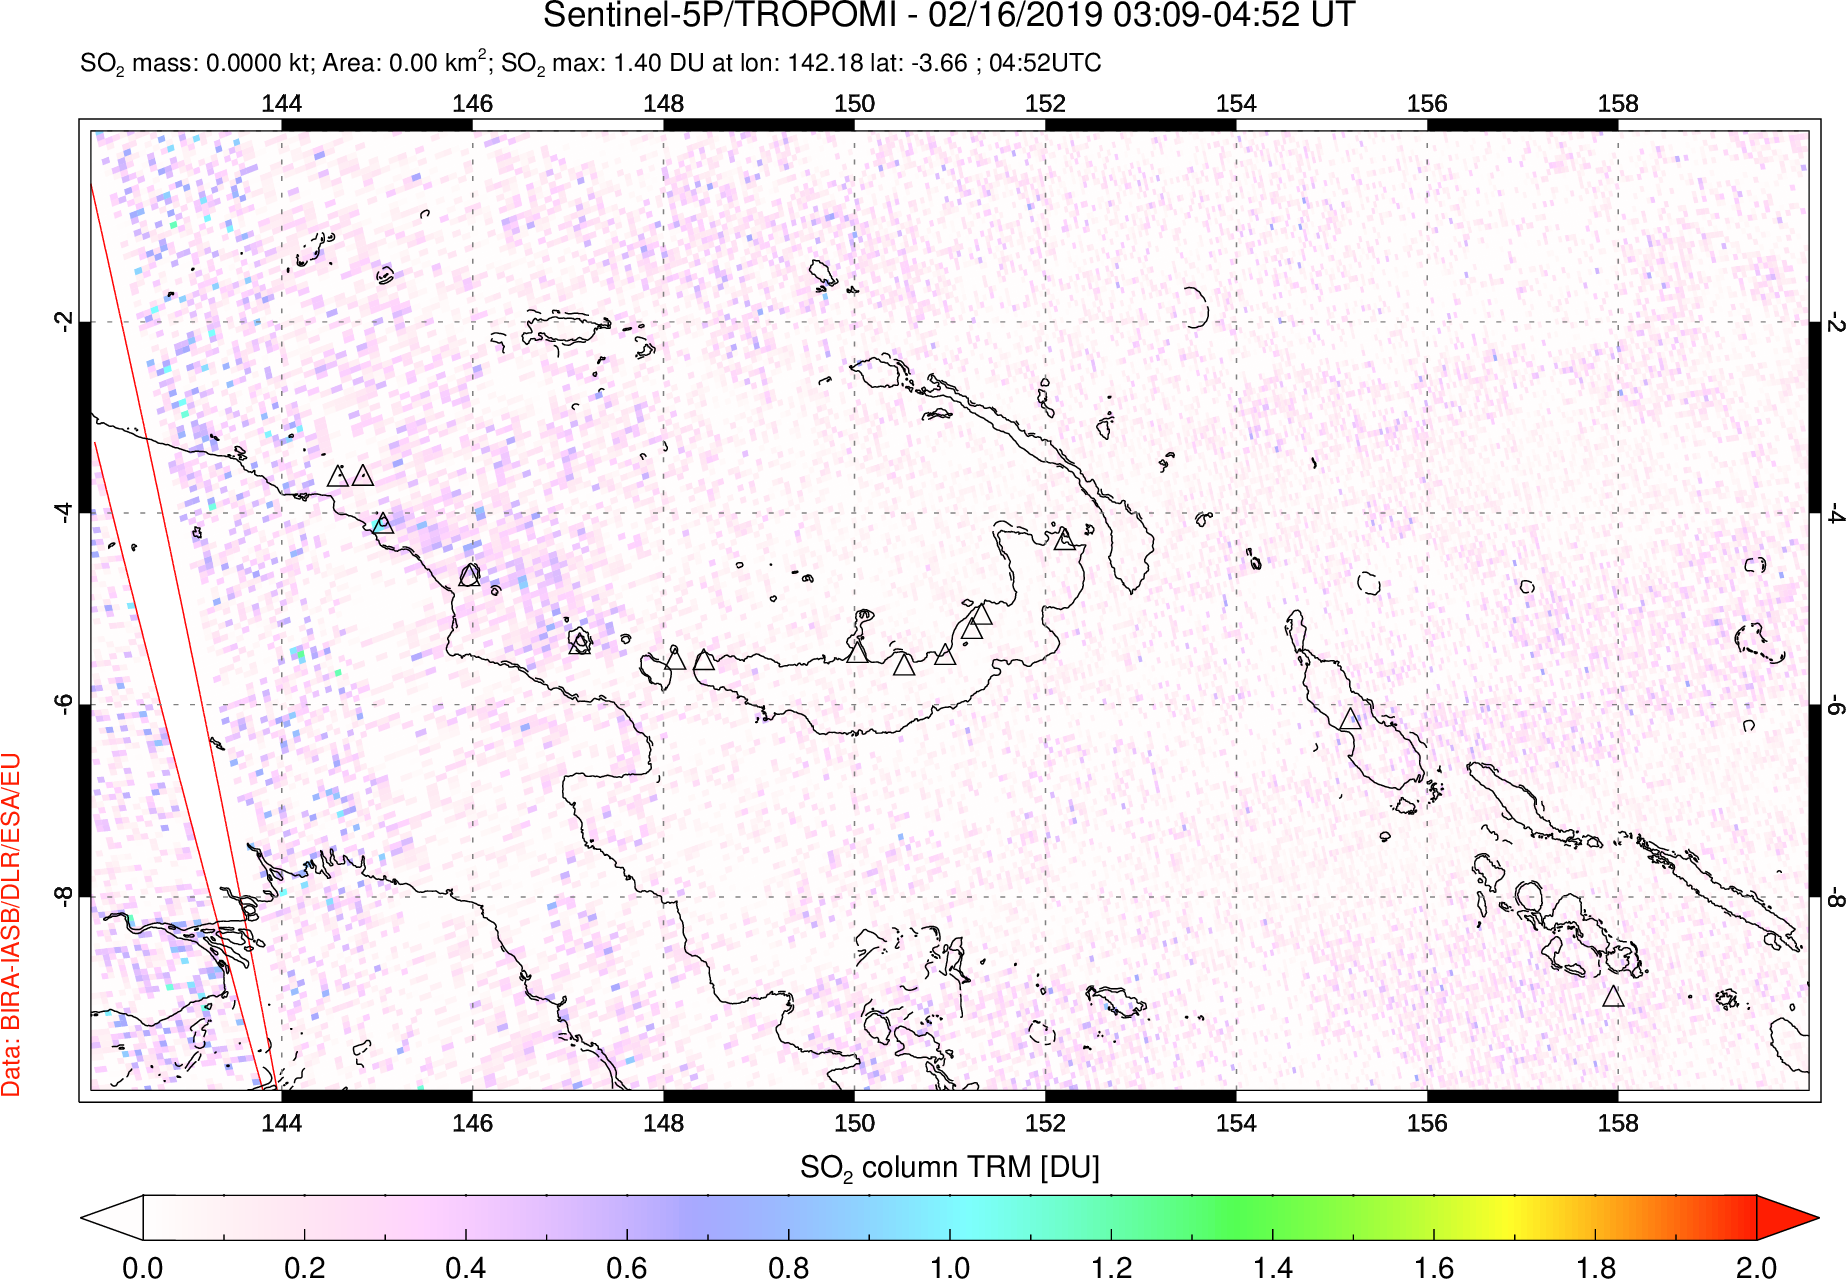 A sulfur dioxide image over Papua, New Guinea on Feb 16, 2019.